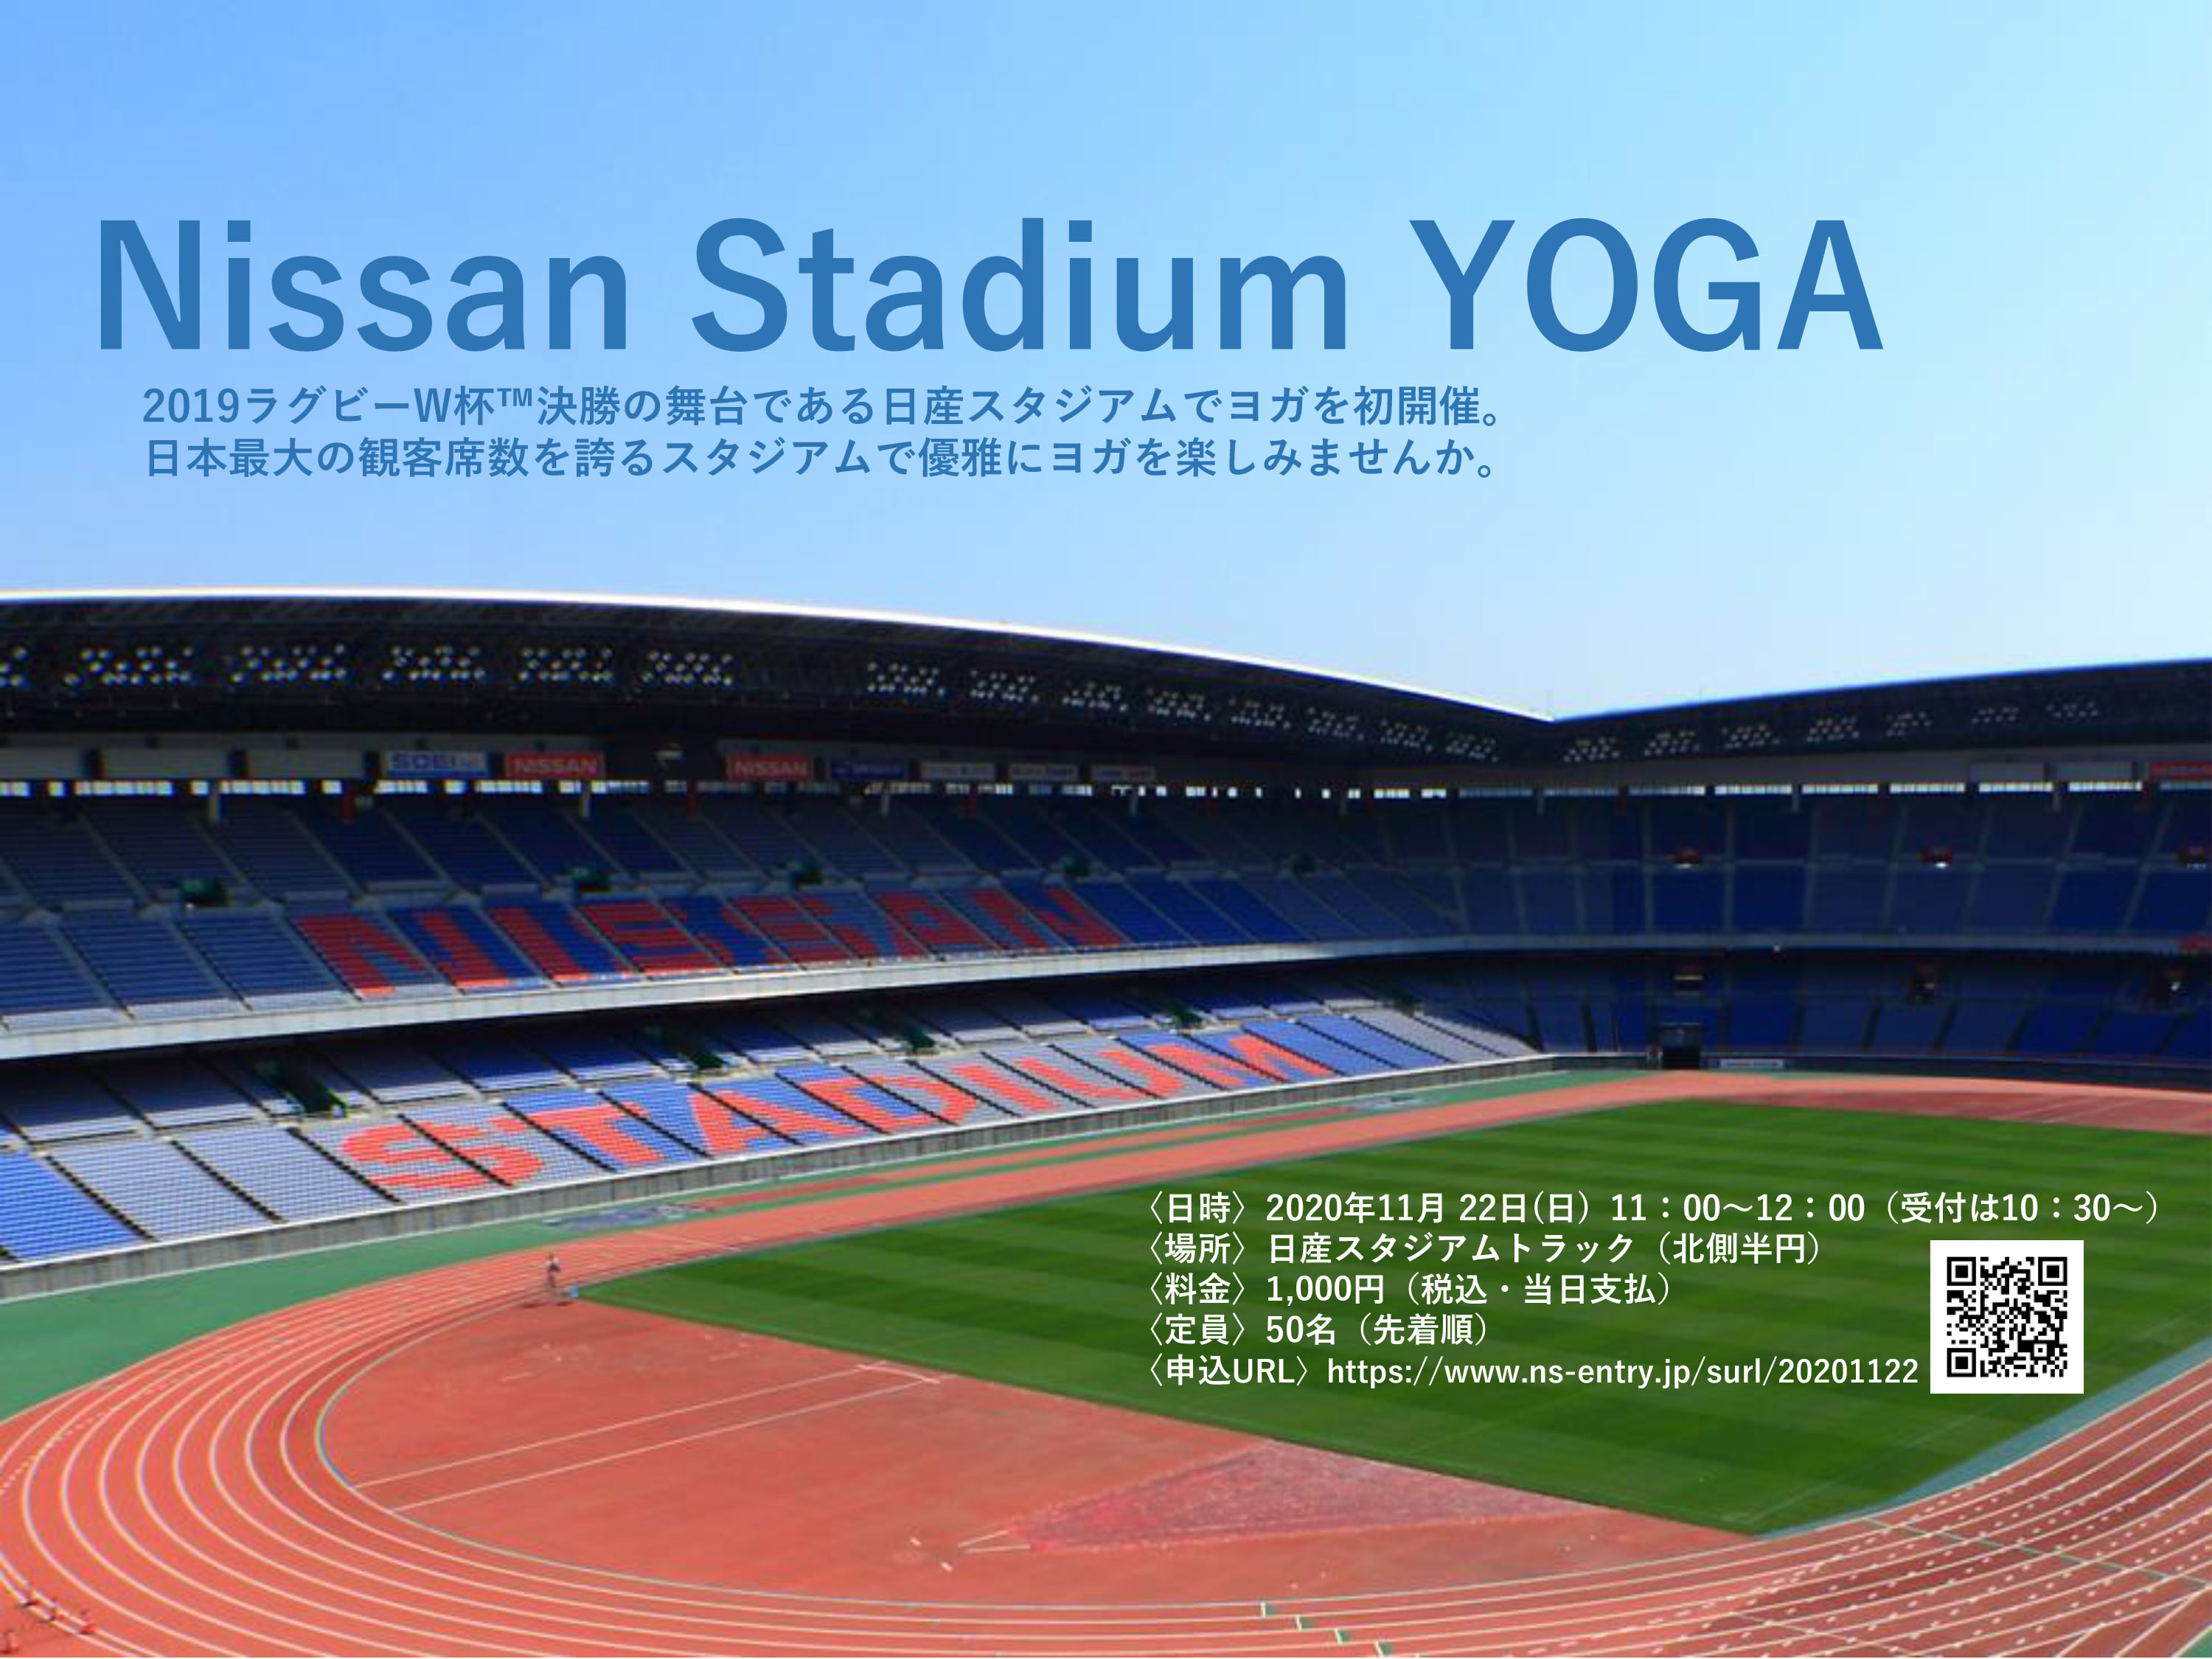 Nissan Stadium Yoga 日産スタジアムヨガ 横浜スポーツ情報サイト ハマスポ